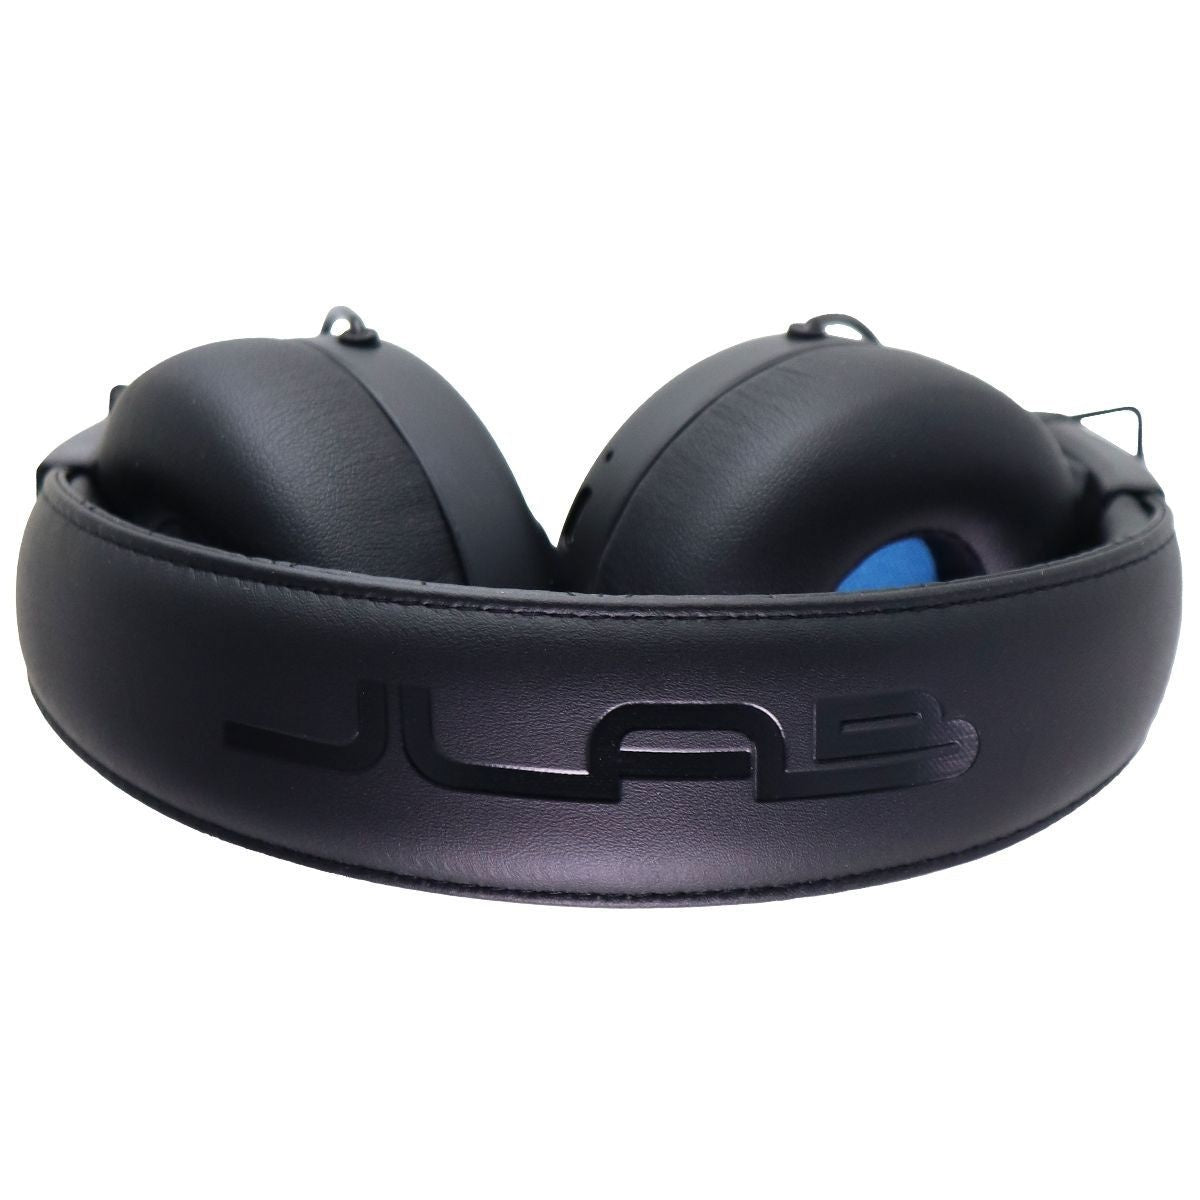 JLab Studio ANC On-Ear Wireless Headphones - Black